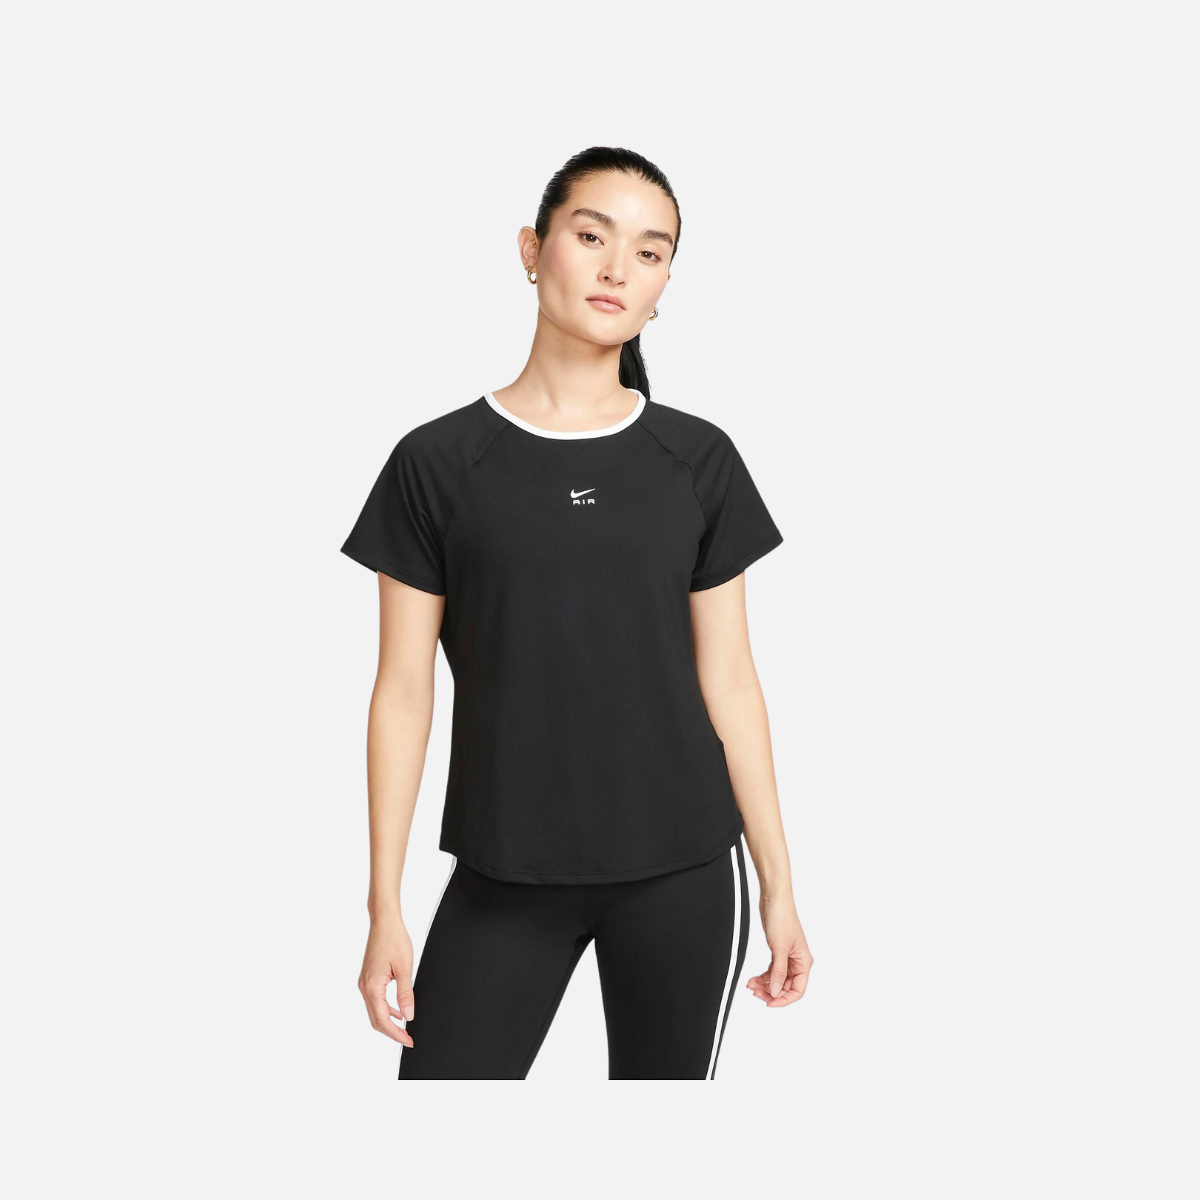 Nike Air Dri-FIT Women's Short-Sleeve Running Top -Black/White/White